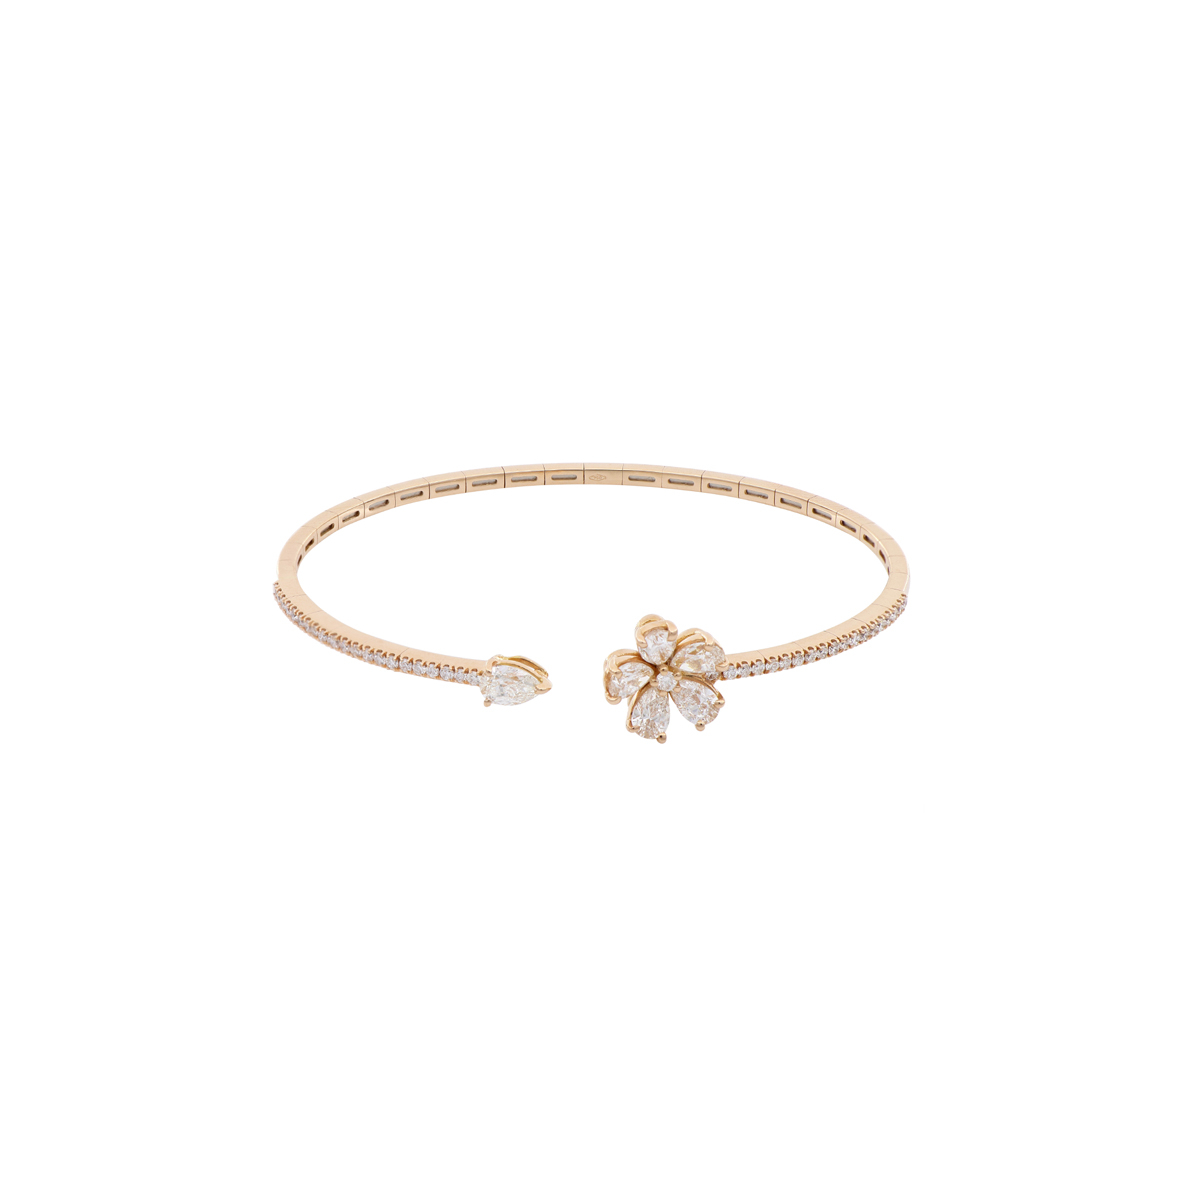 Adjustable Open Cuff Bangle Bracelet with Diamond Flower